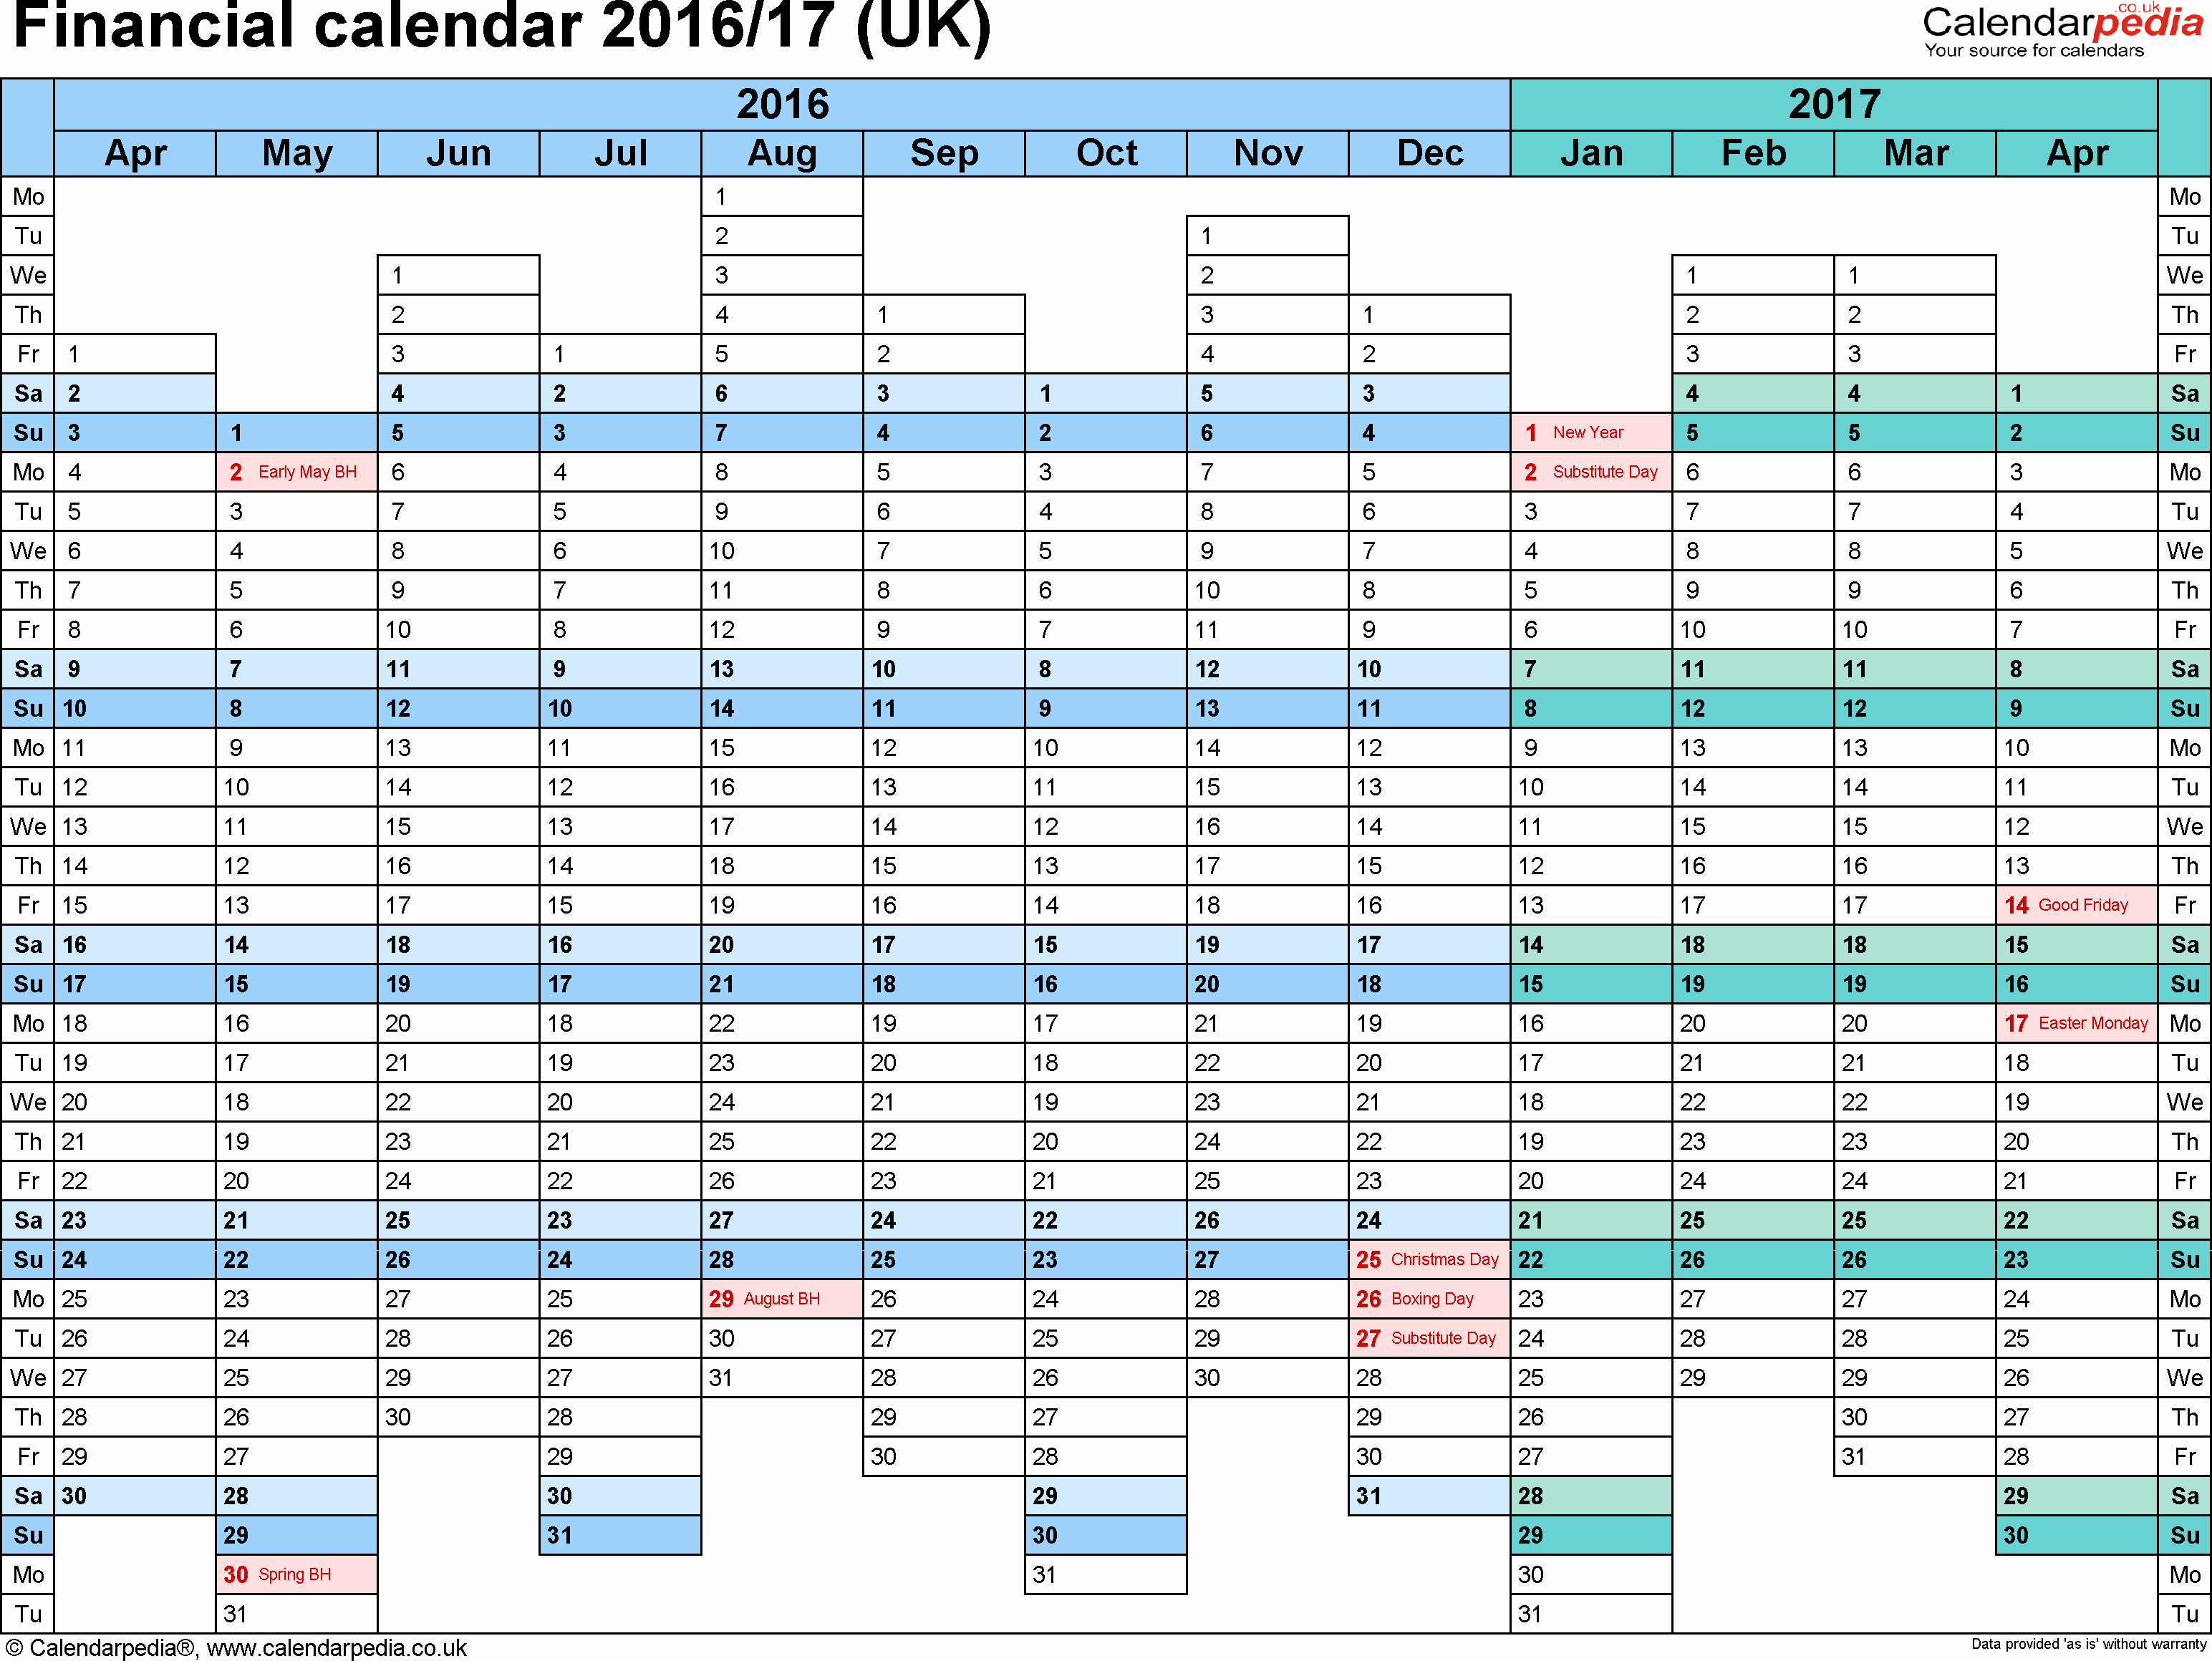 Fiscal Year Calendar 2016 Template Inspirational Financial Calendars 2016 17 Uk In Microsoft Excel format